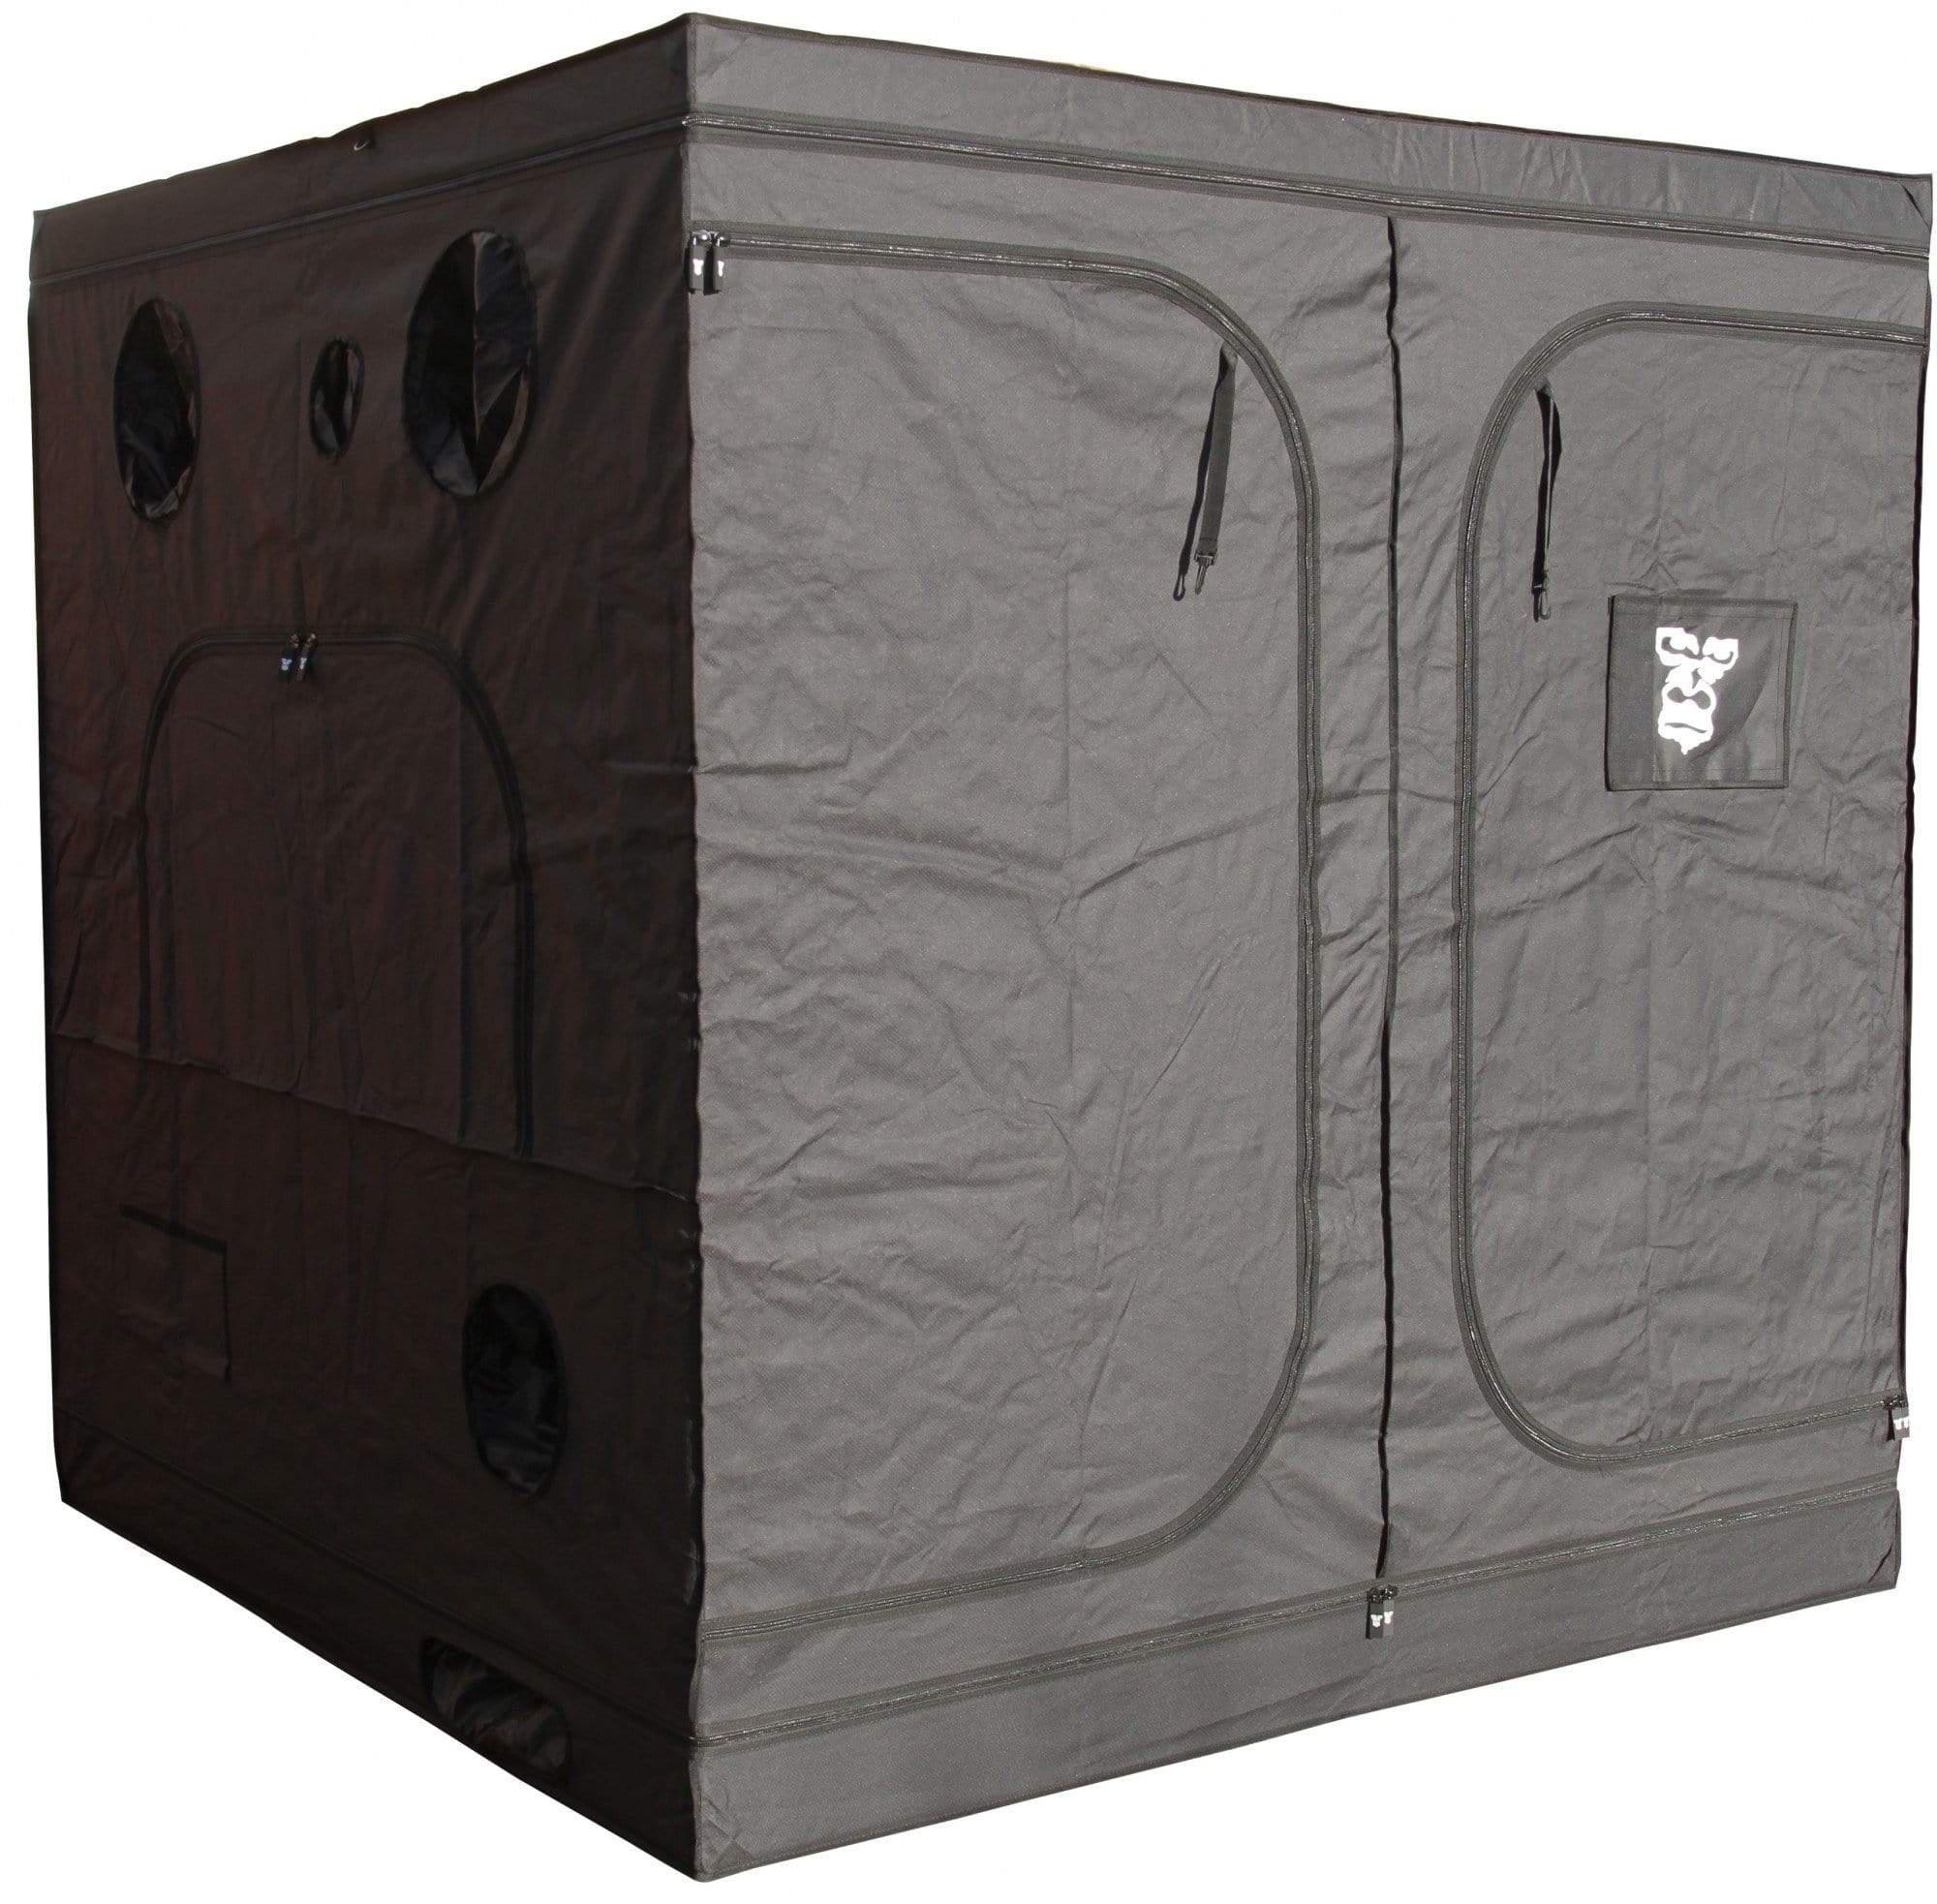 Gorilla Box Tent - 240 x 240 x 200cm